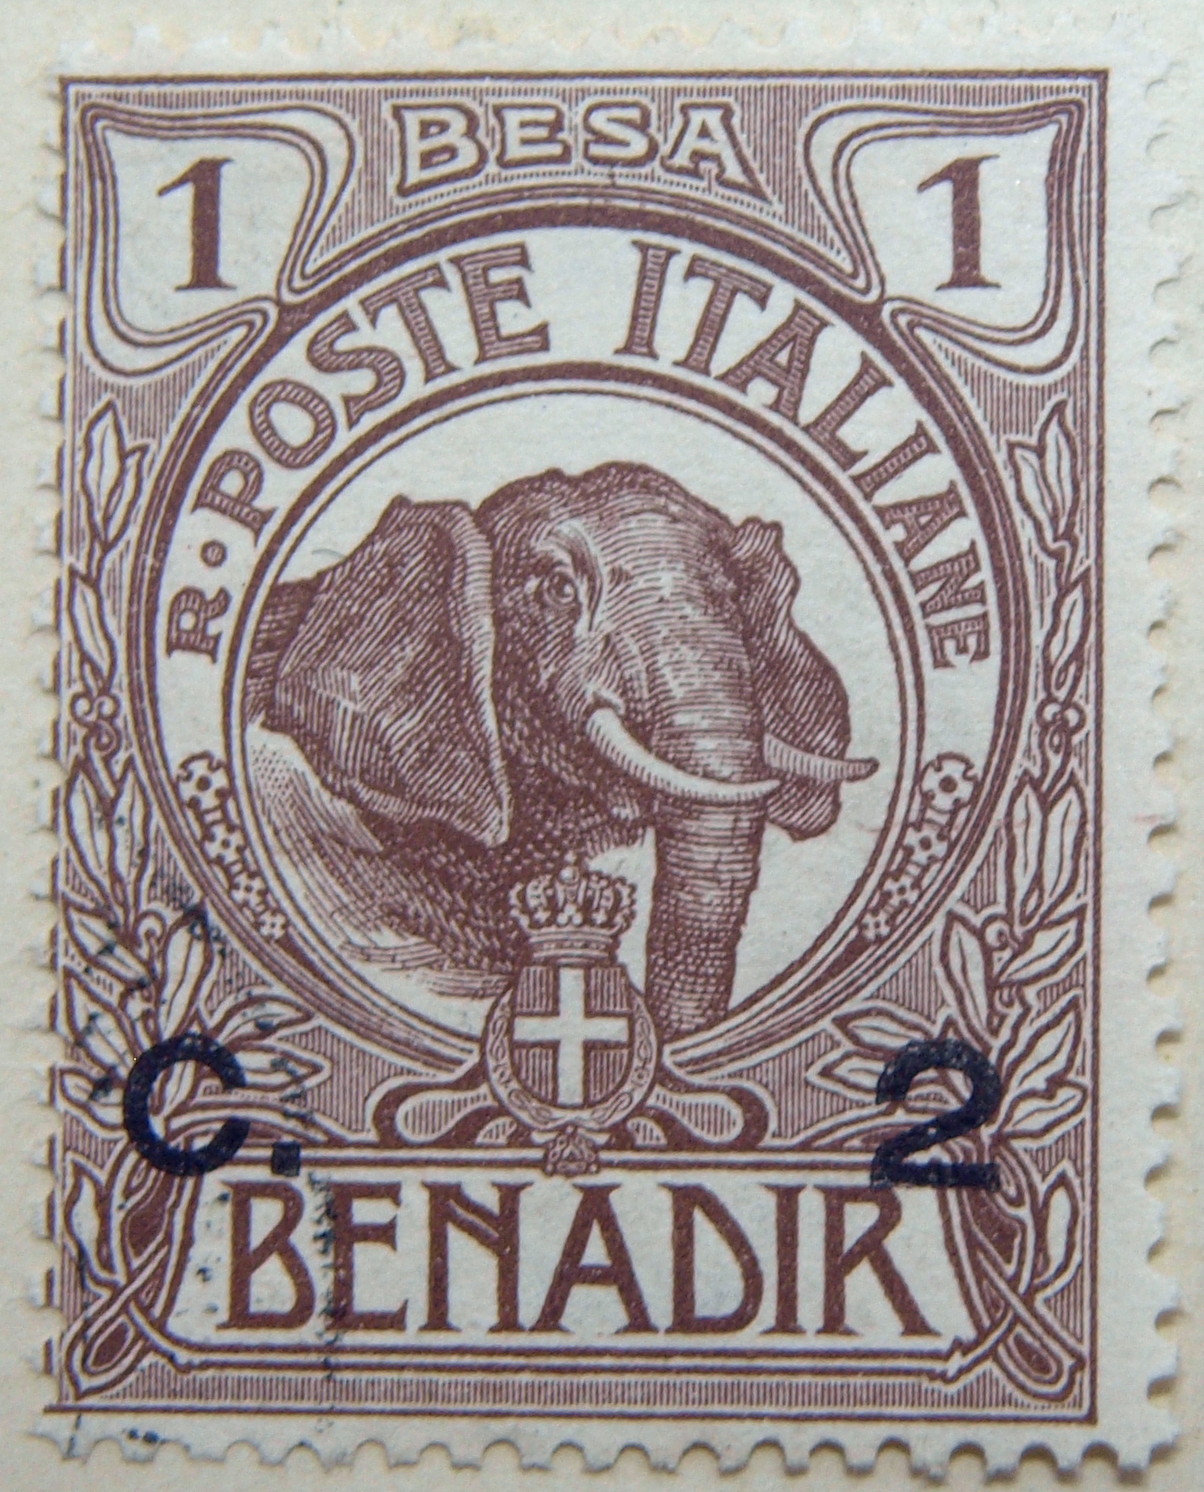 Italian Somaliland stamps